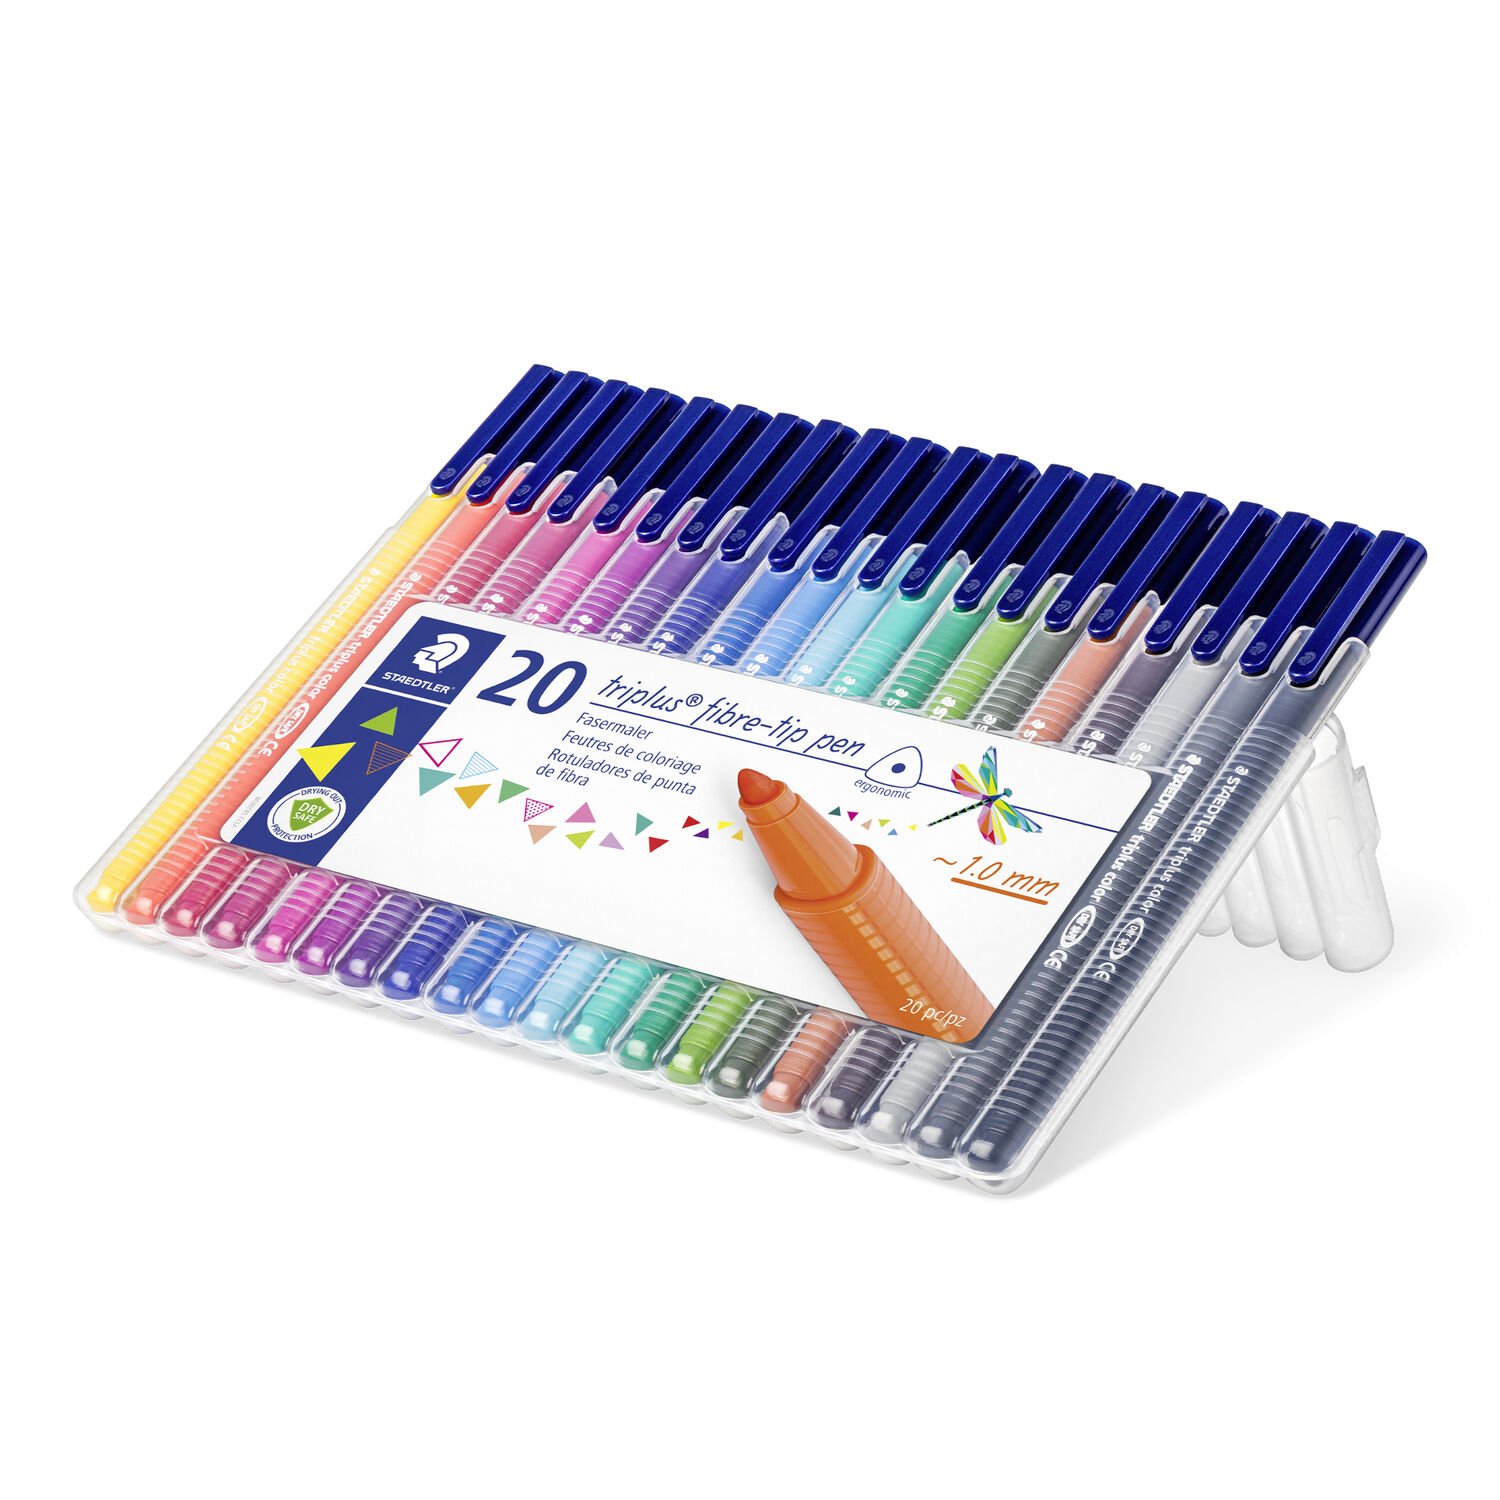 Staedtler Triplus Fineliner Pen - Assorted Colors, Set of 20